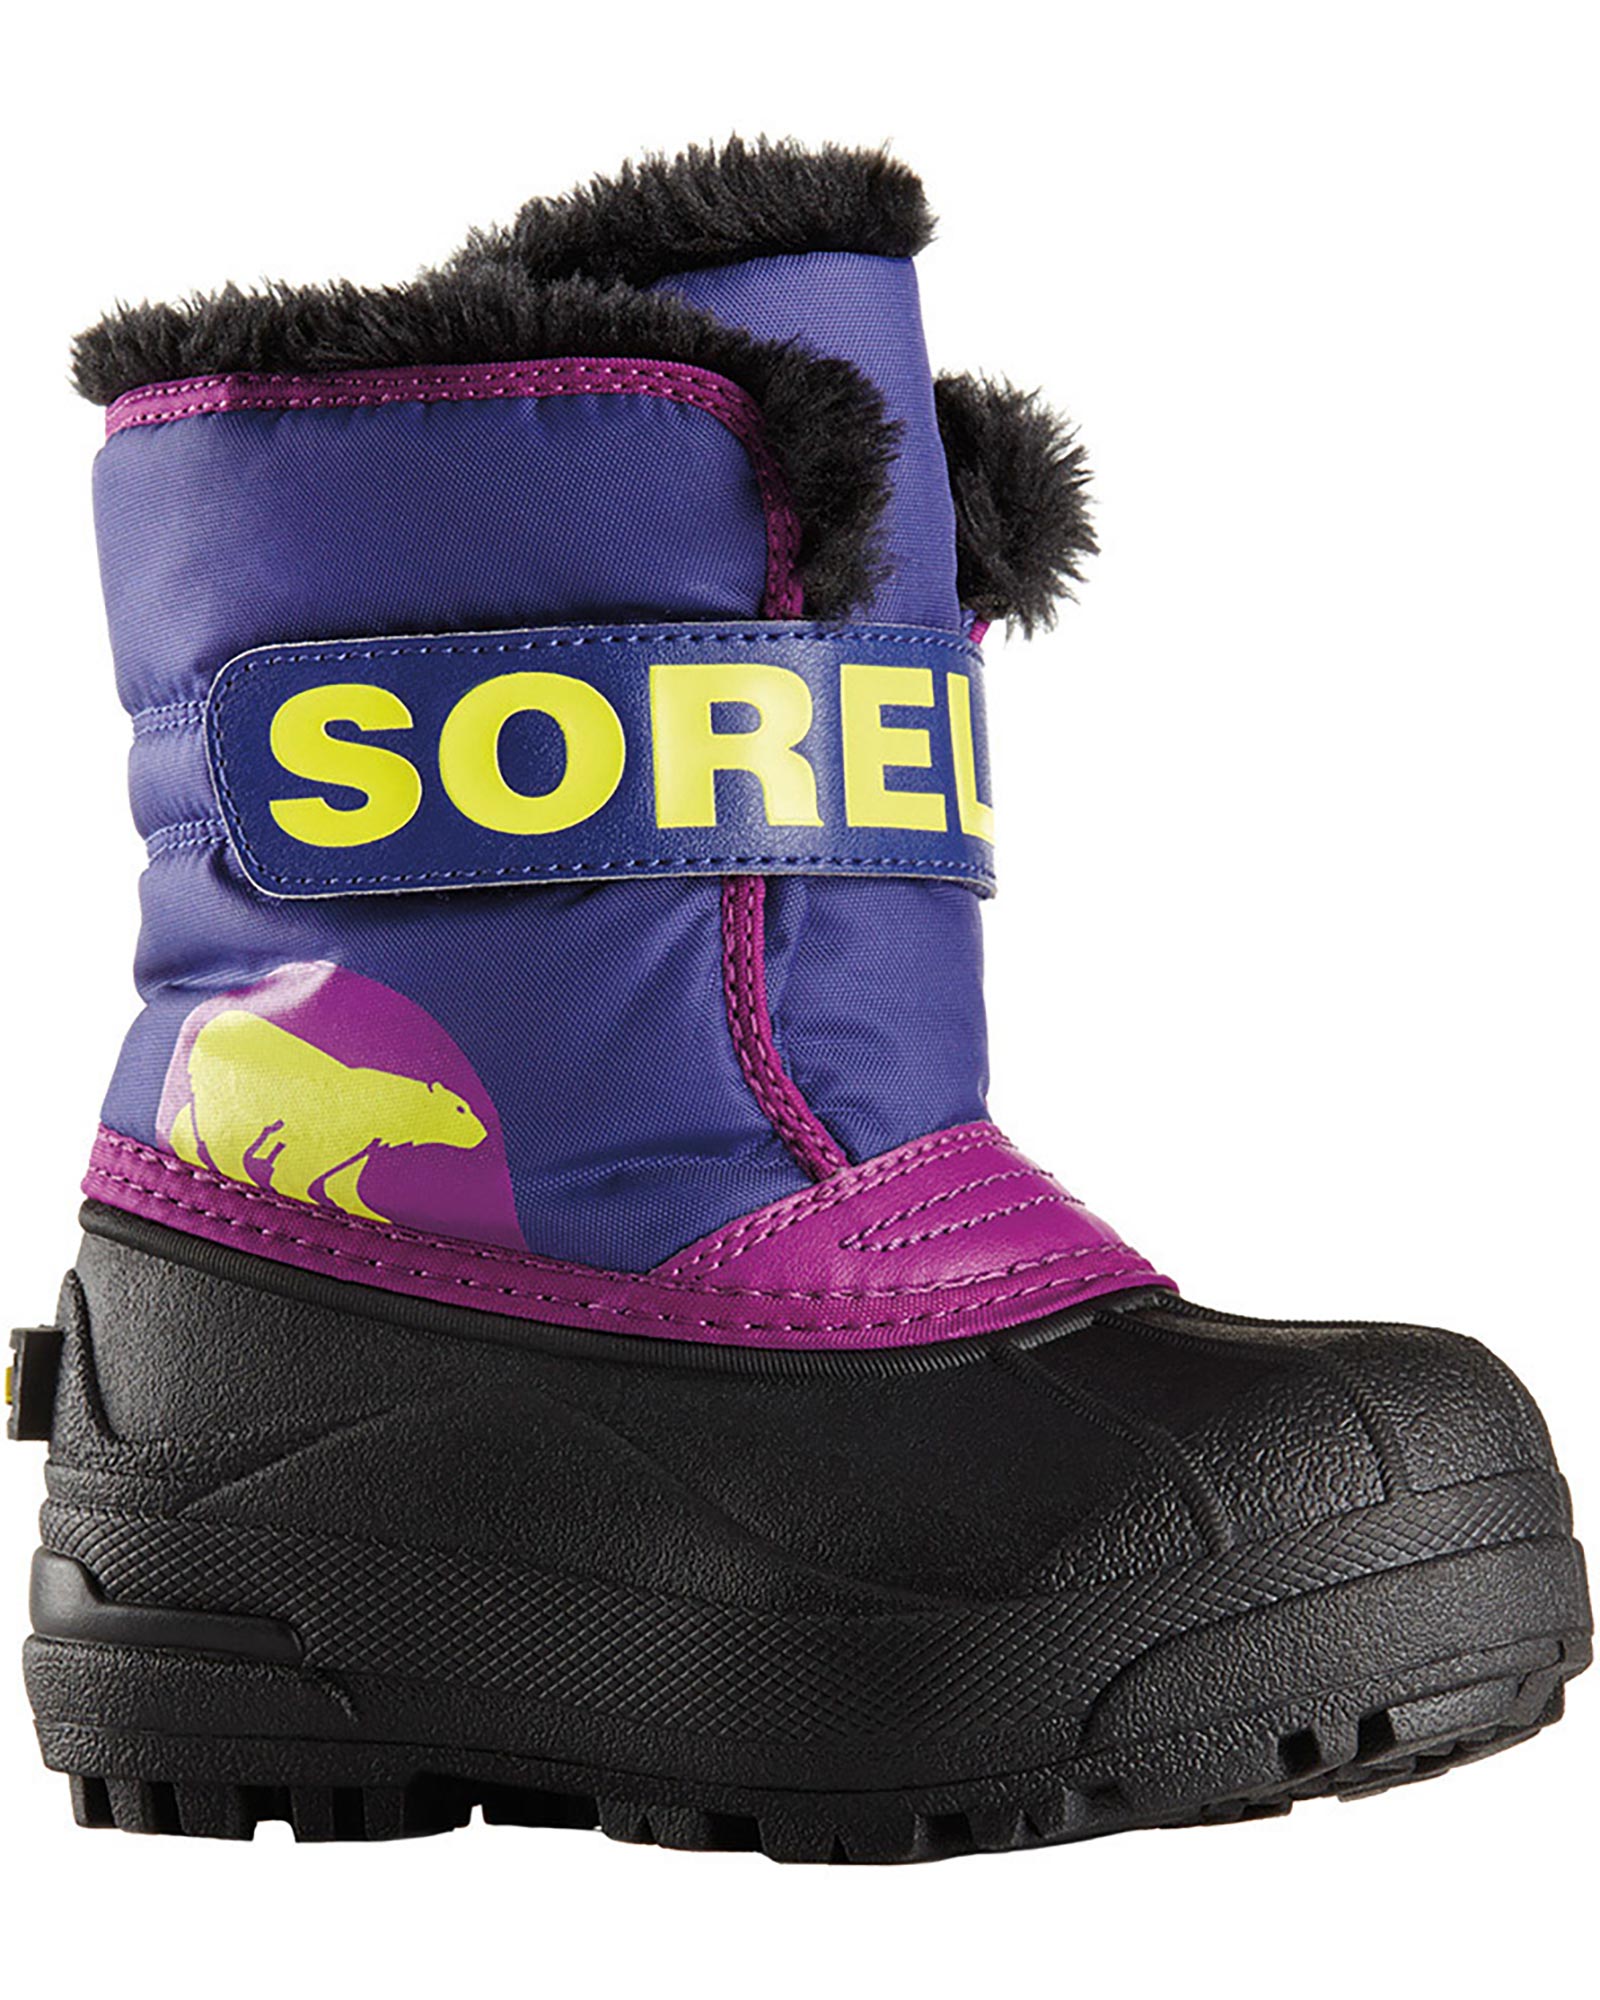 Sorel Snow Commander Toddler Snow Boots - Grape Juice/Bright Plum UK 3 INF